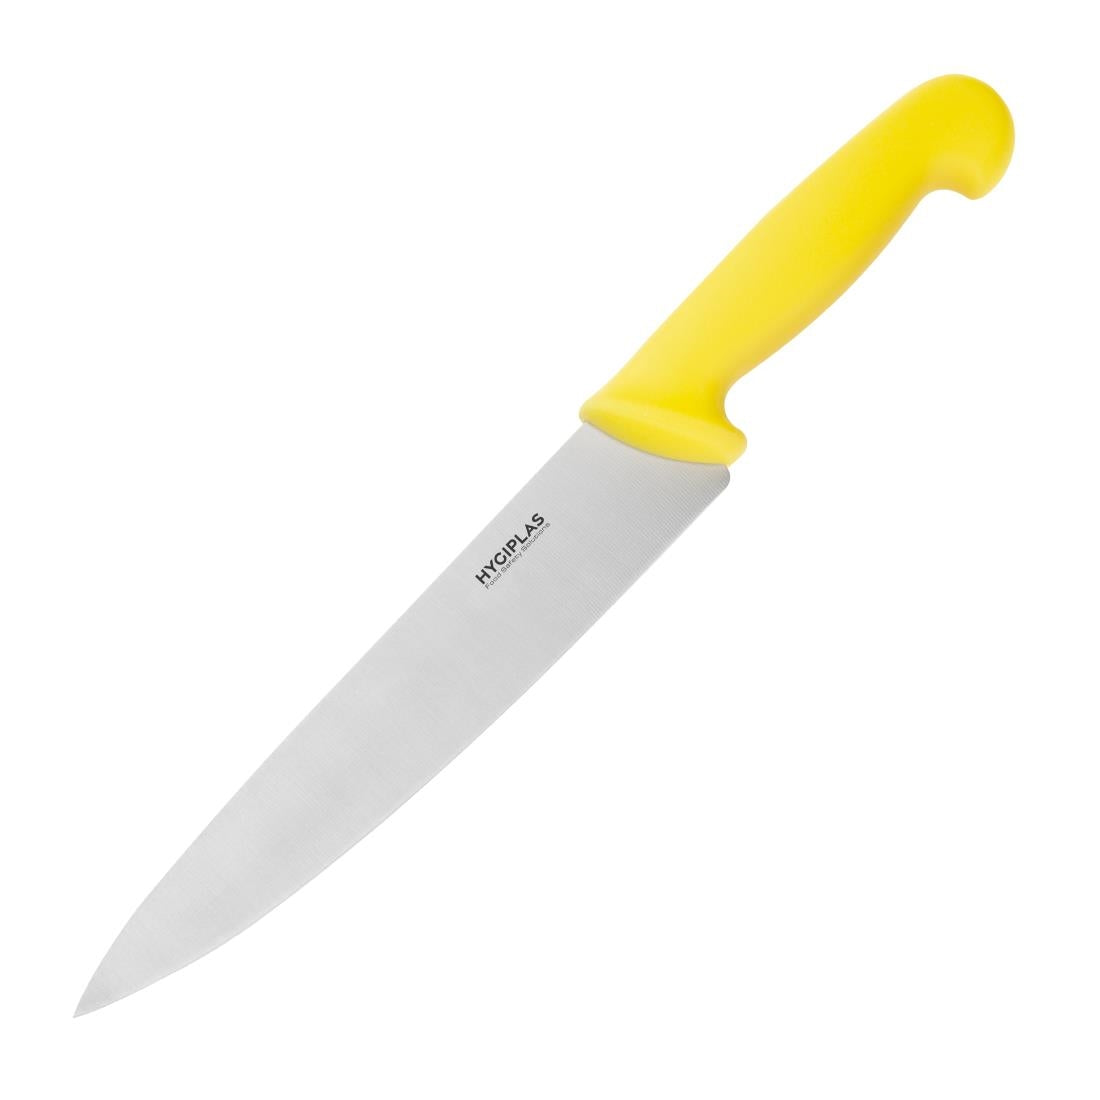 C803 Hygiplas Chefs Knife Yellow 21.5cm JD Catering Equipment Solutions Ltd